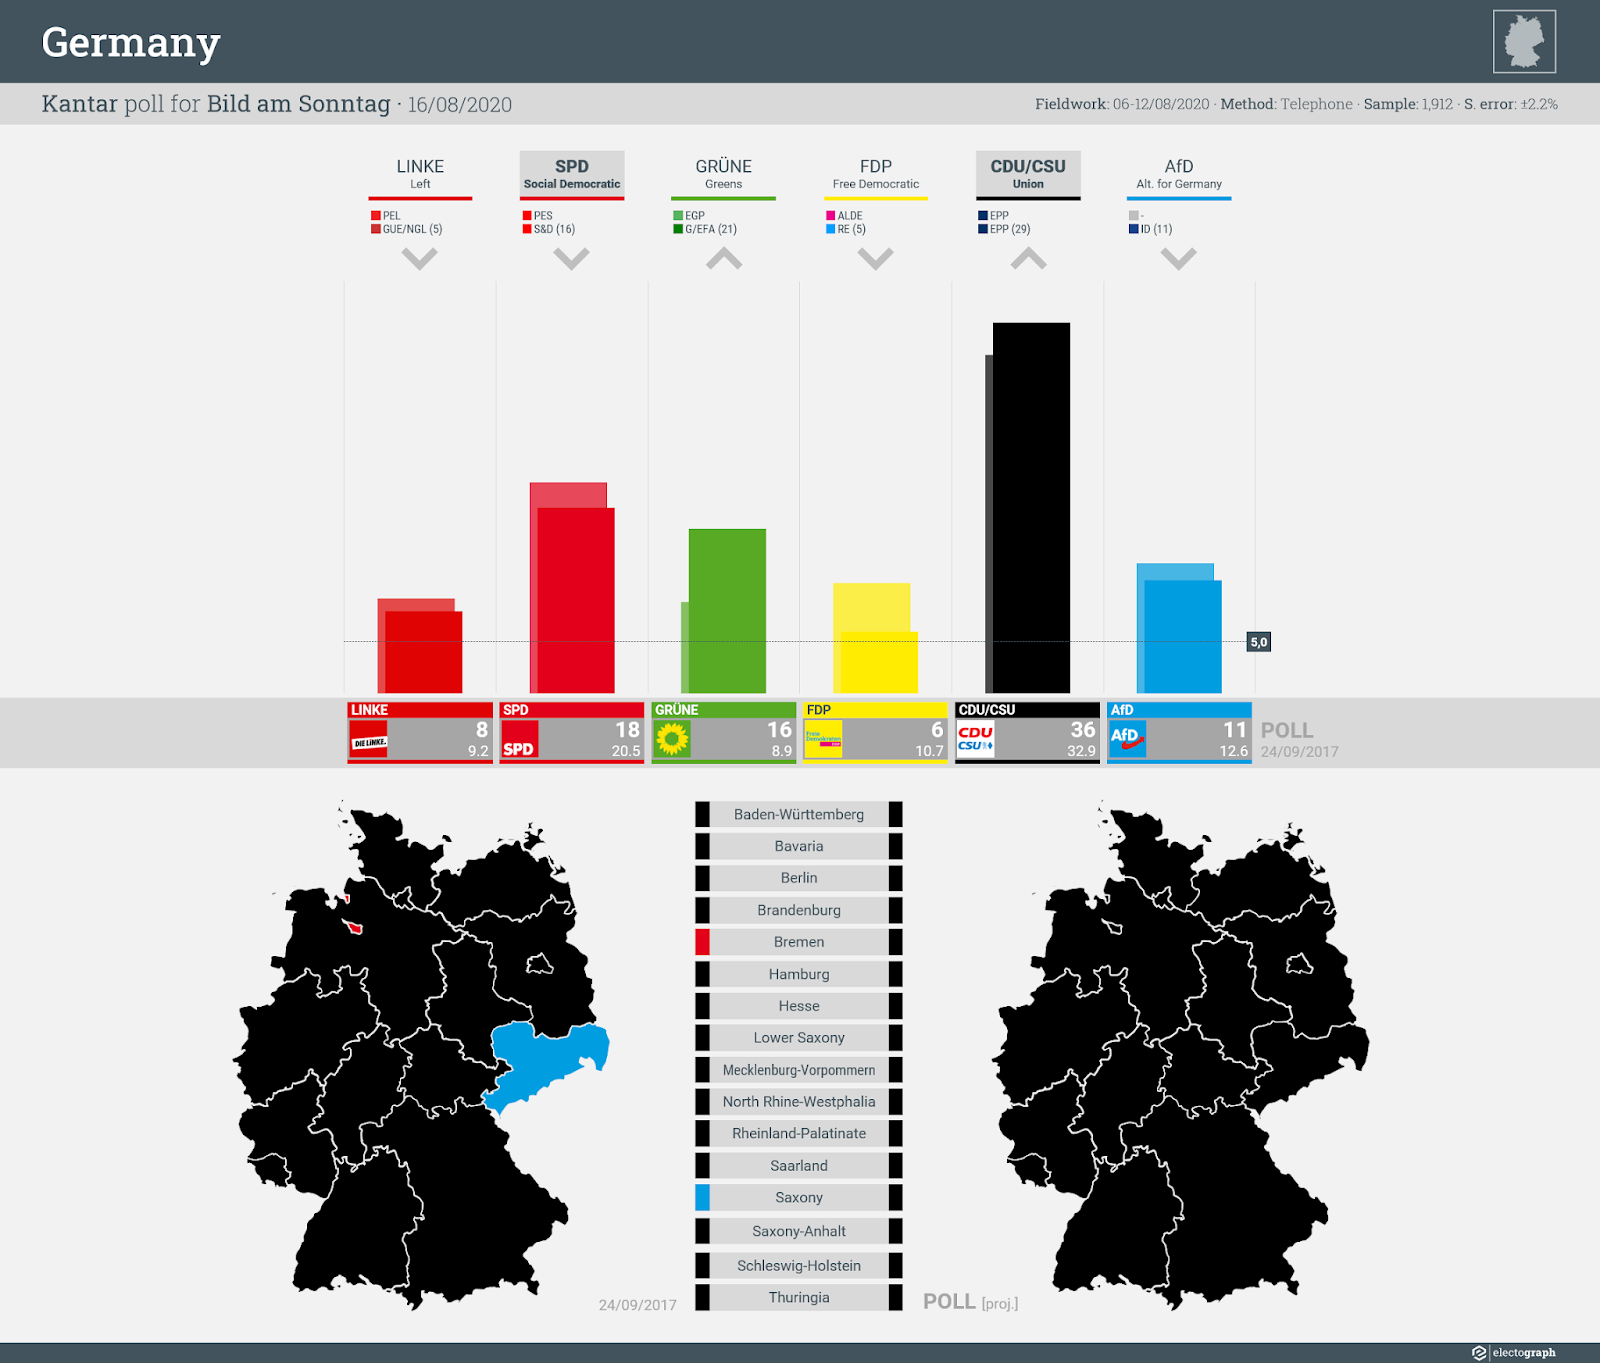 GERMANY: Kantar poll chart for Bild am Sonntag, 16 August 2020